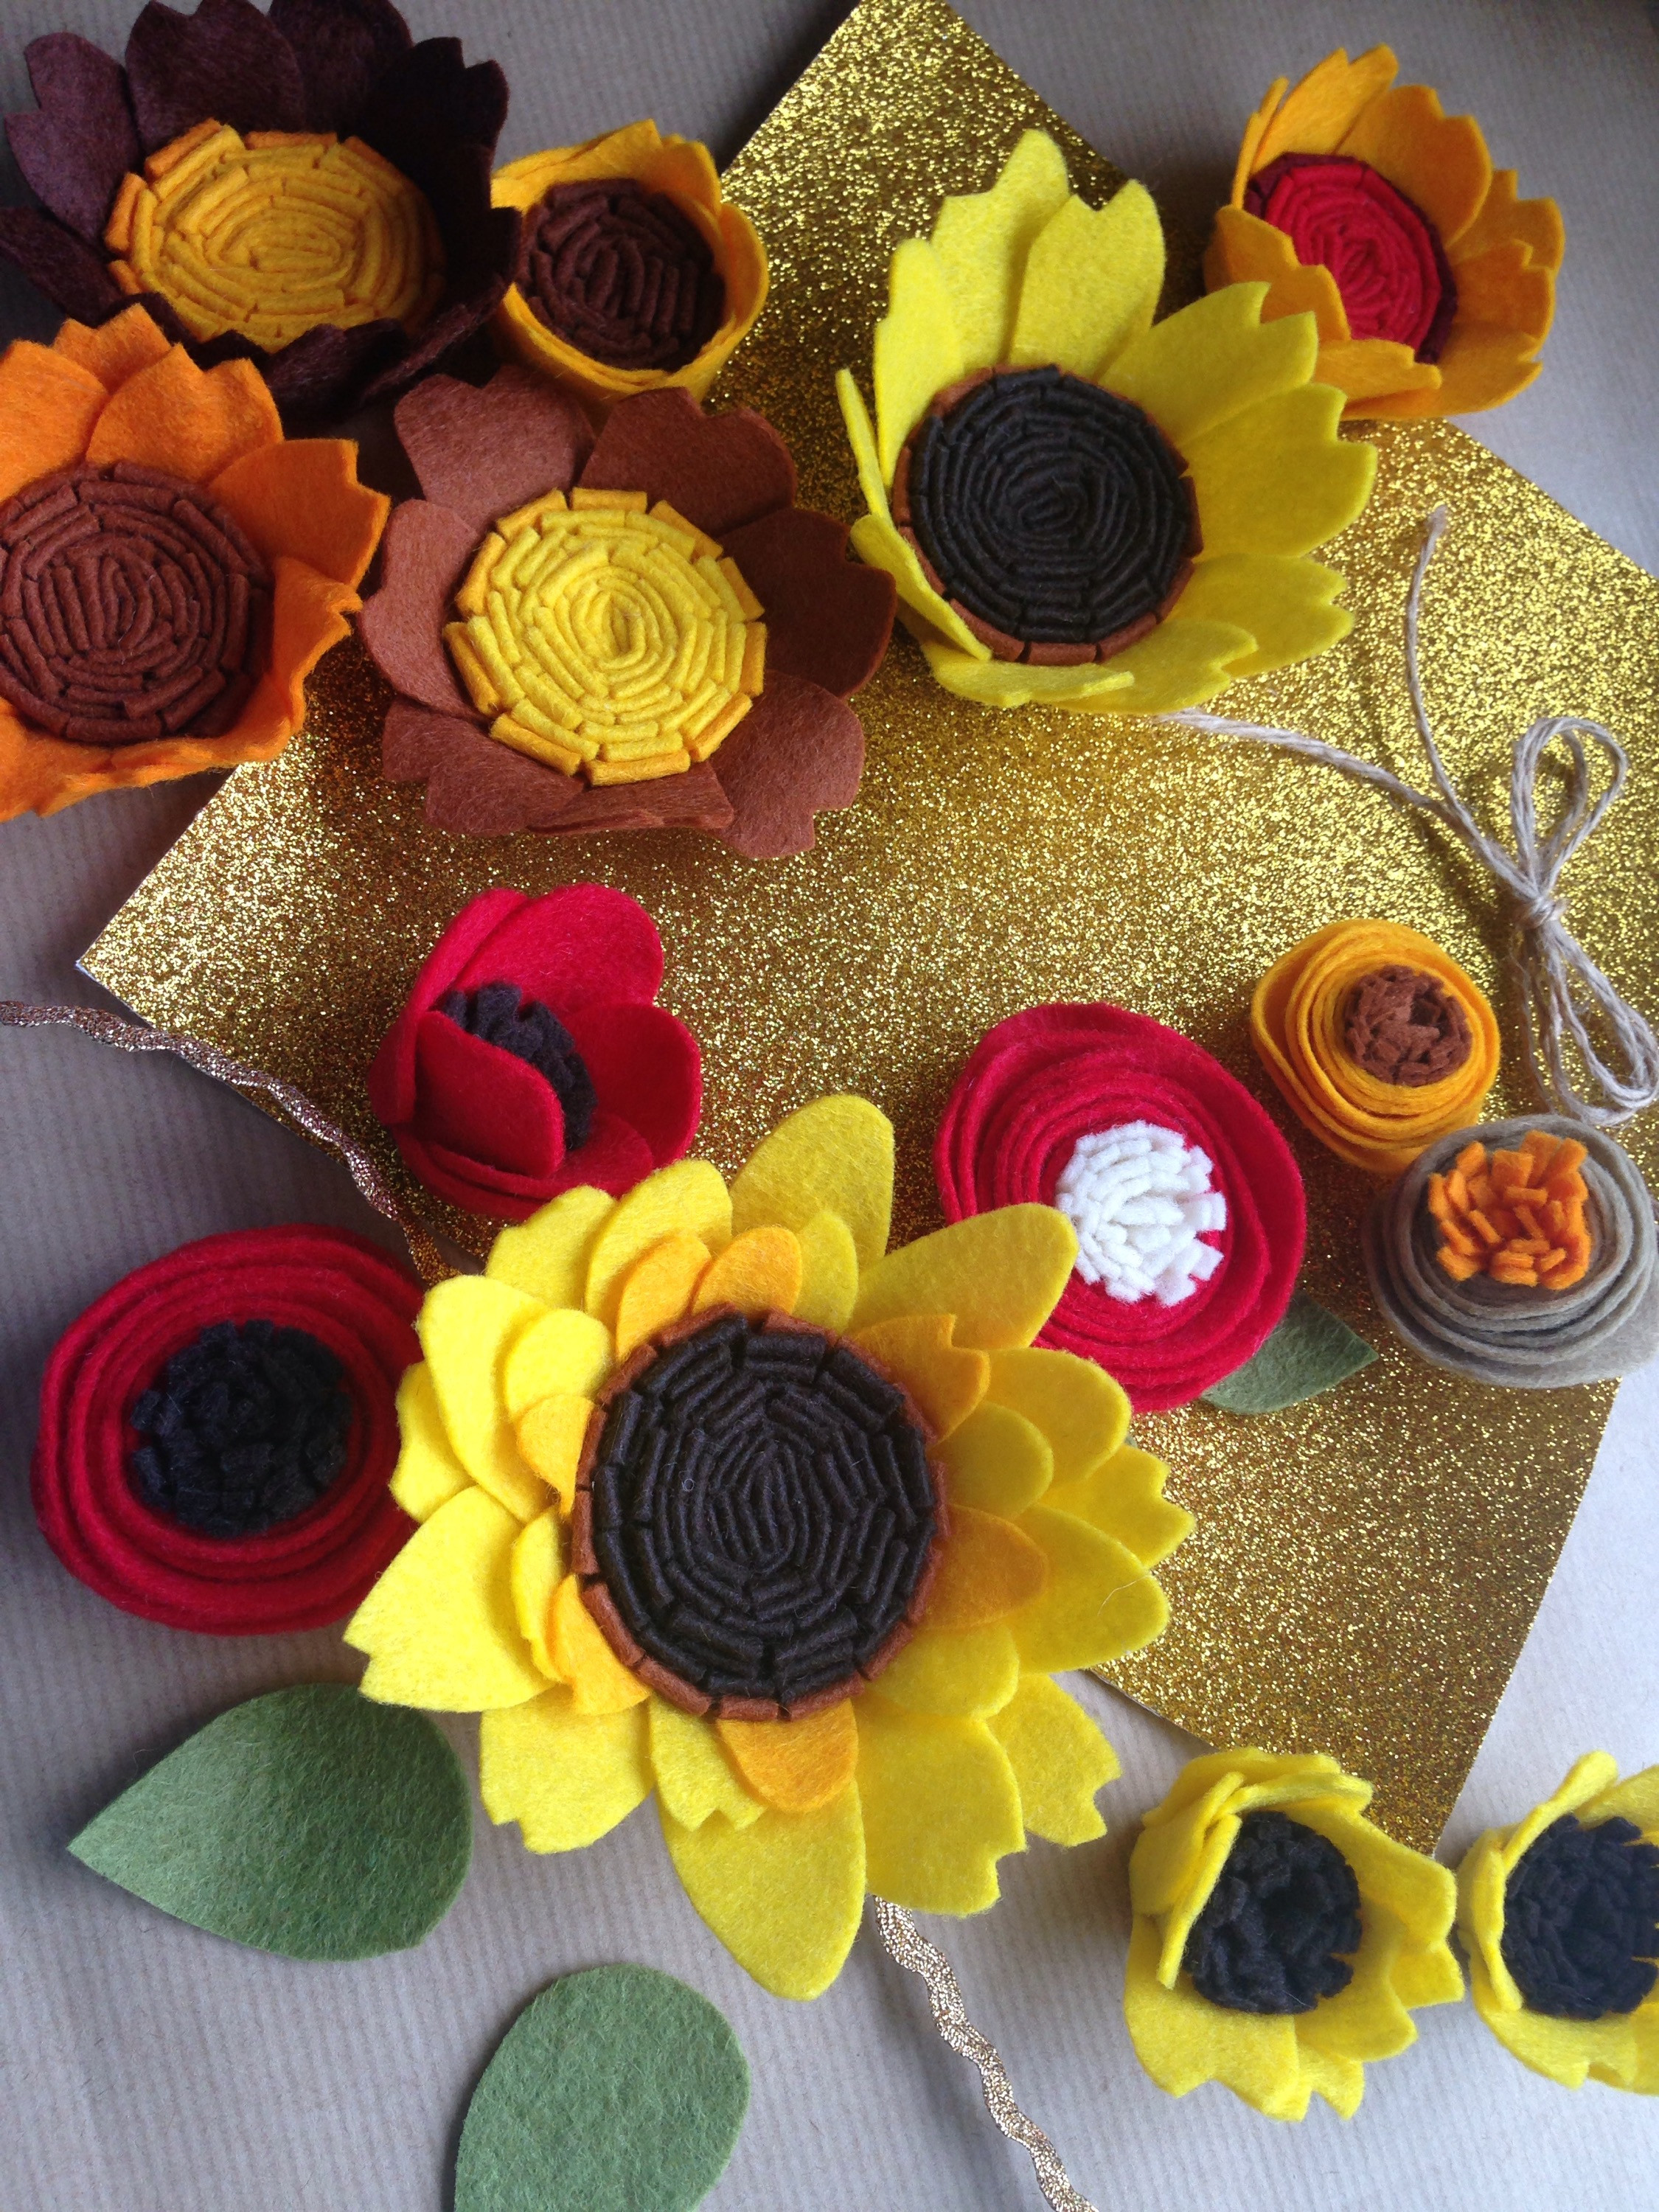 Best ideas about Felt Flowers DIY
. Save or Pin DIY felt flowers SUNFLOWER – The Crafty Mummy Now.